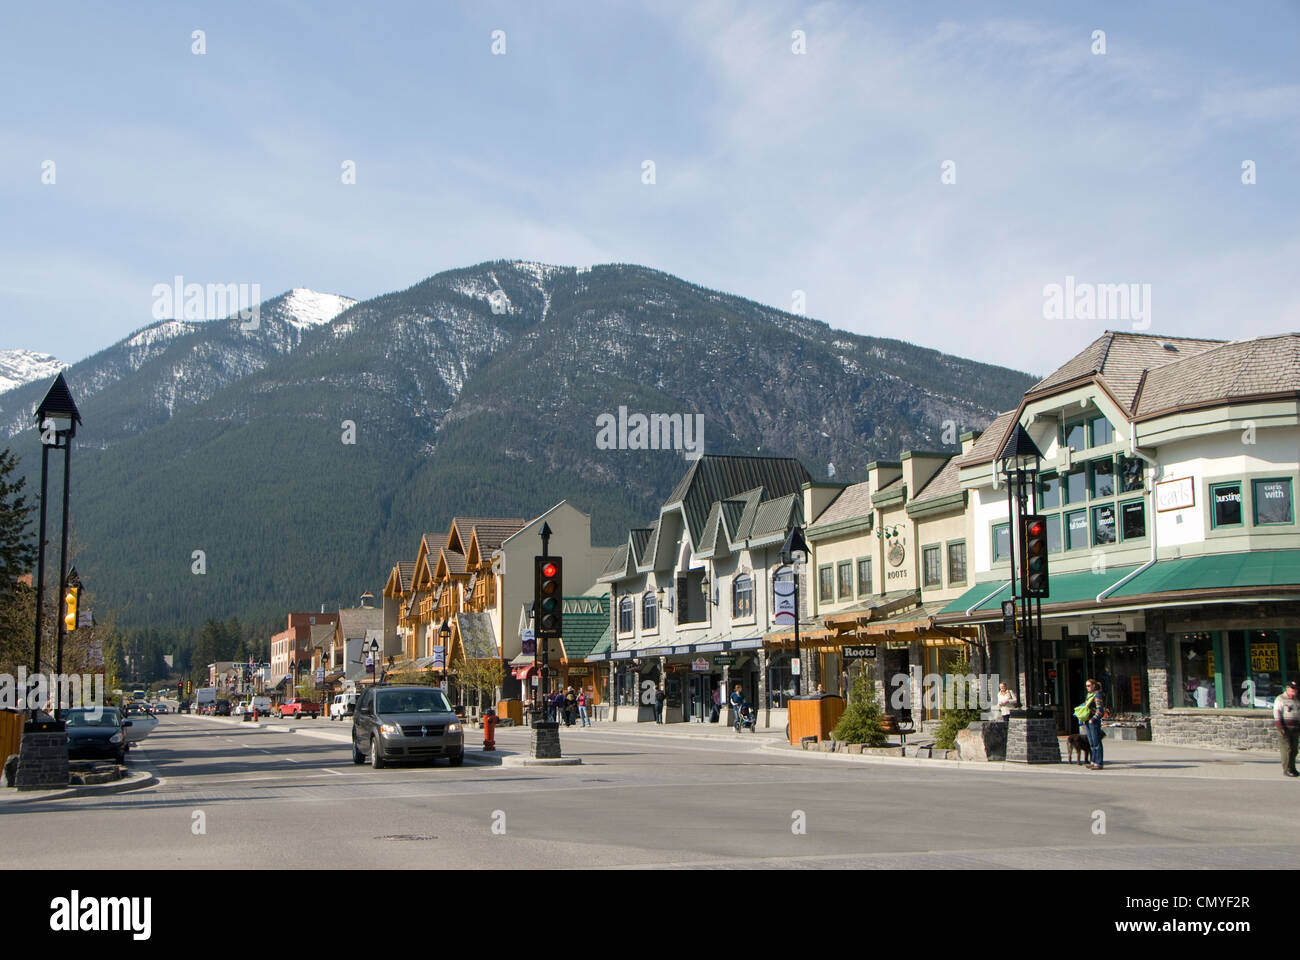 Banff Avenue, Main Street, Banff, Alberta, Canada Banque D'Images